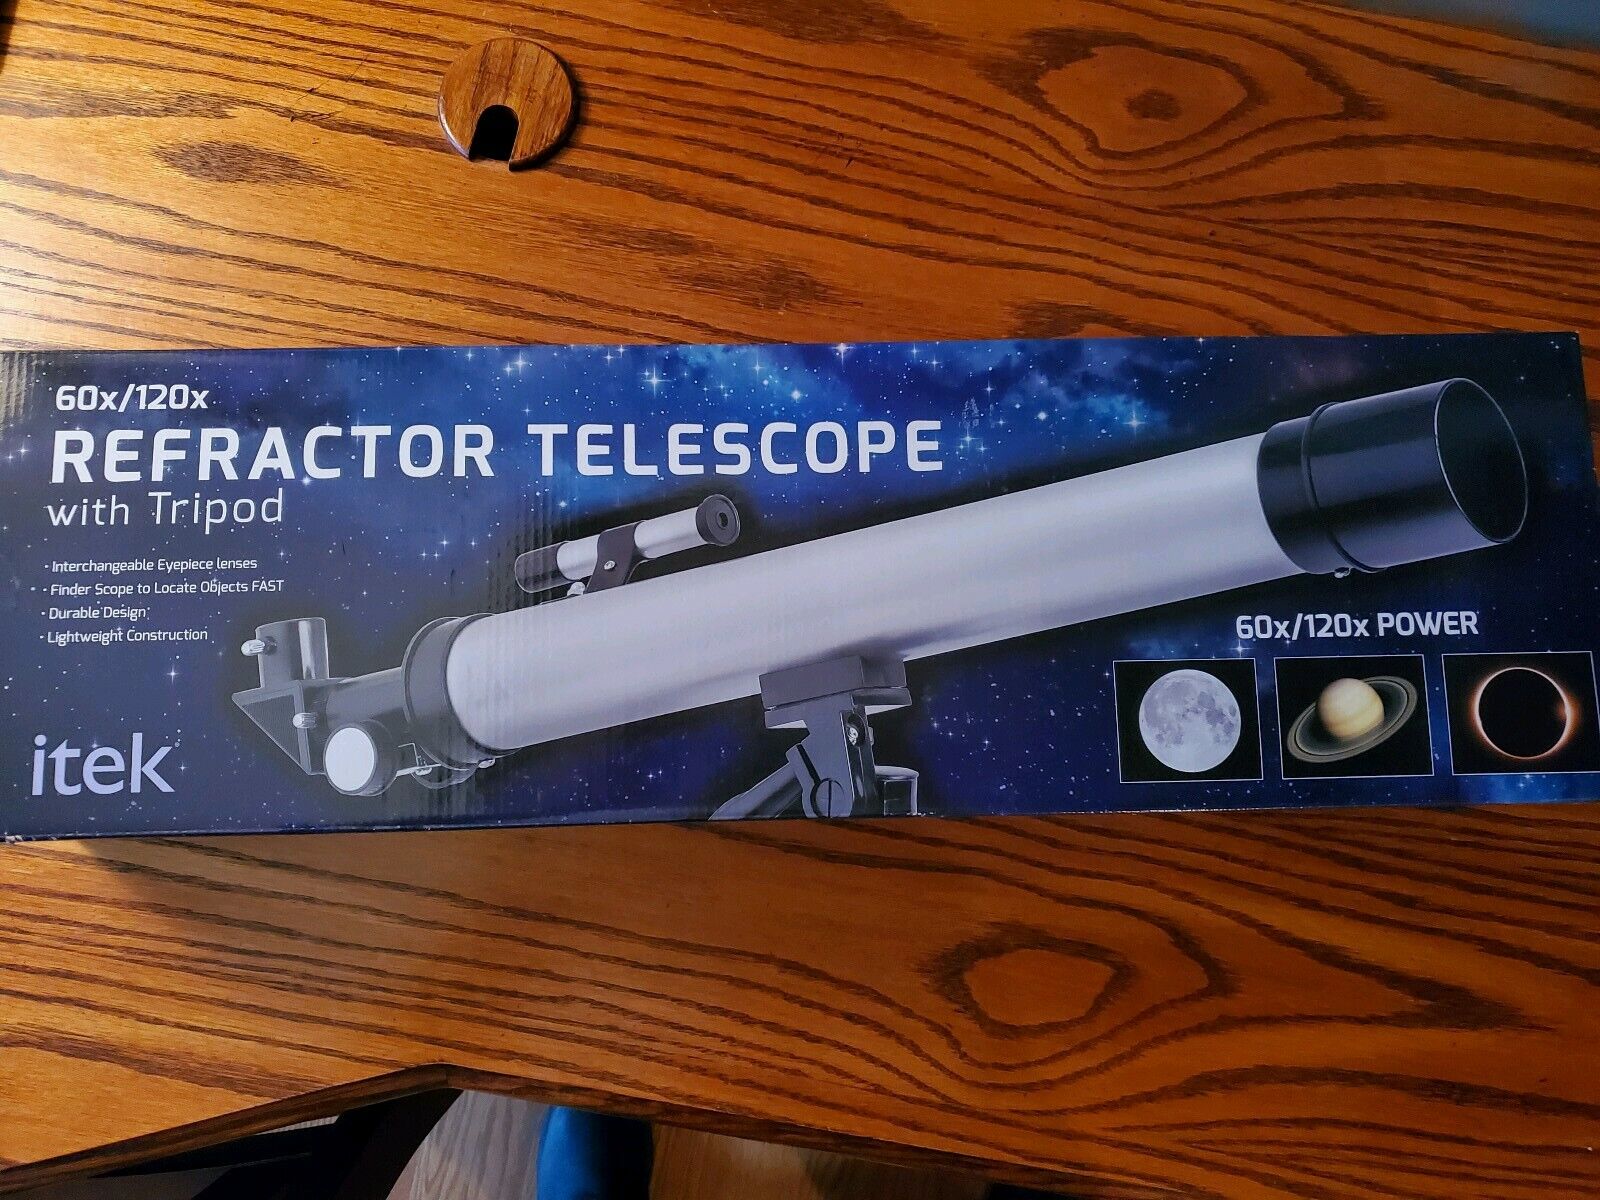 Itek Refractor Telescope with tripod.60x / 120x